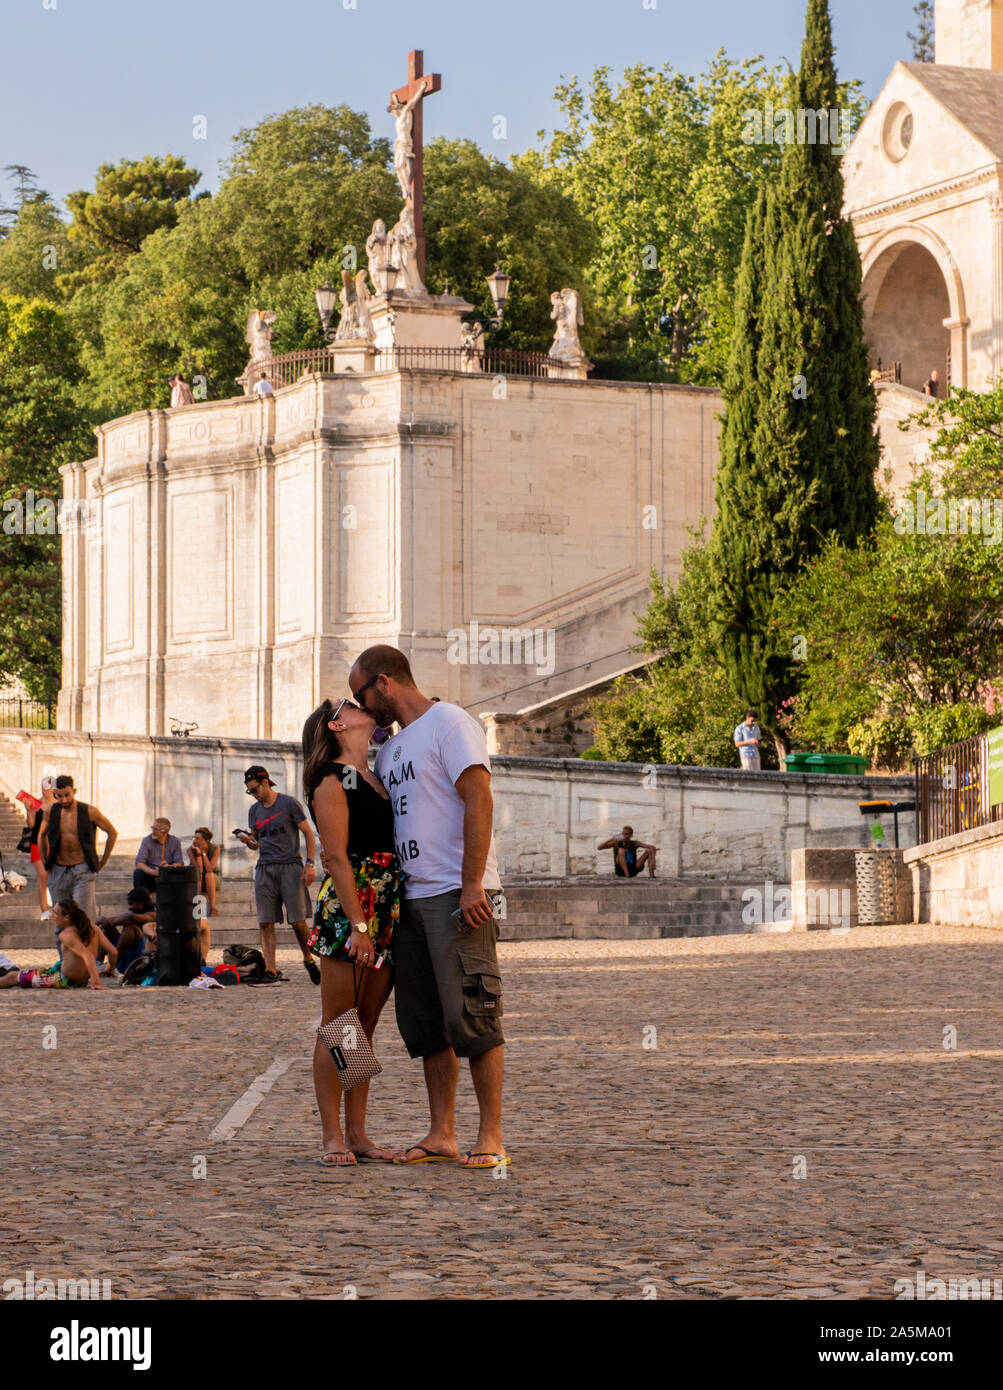 Paar Küssen in Square, Avignon Notre Dame Kathedrale &Square, Avignon, Provence, Frankreich Stockfoto